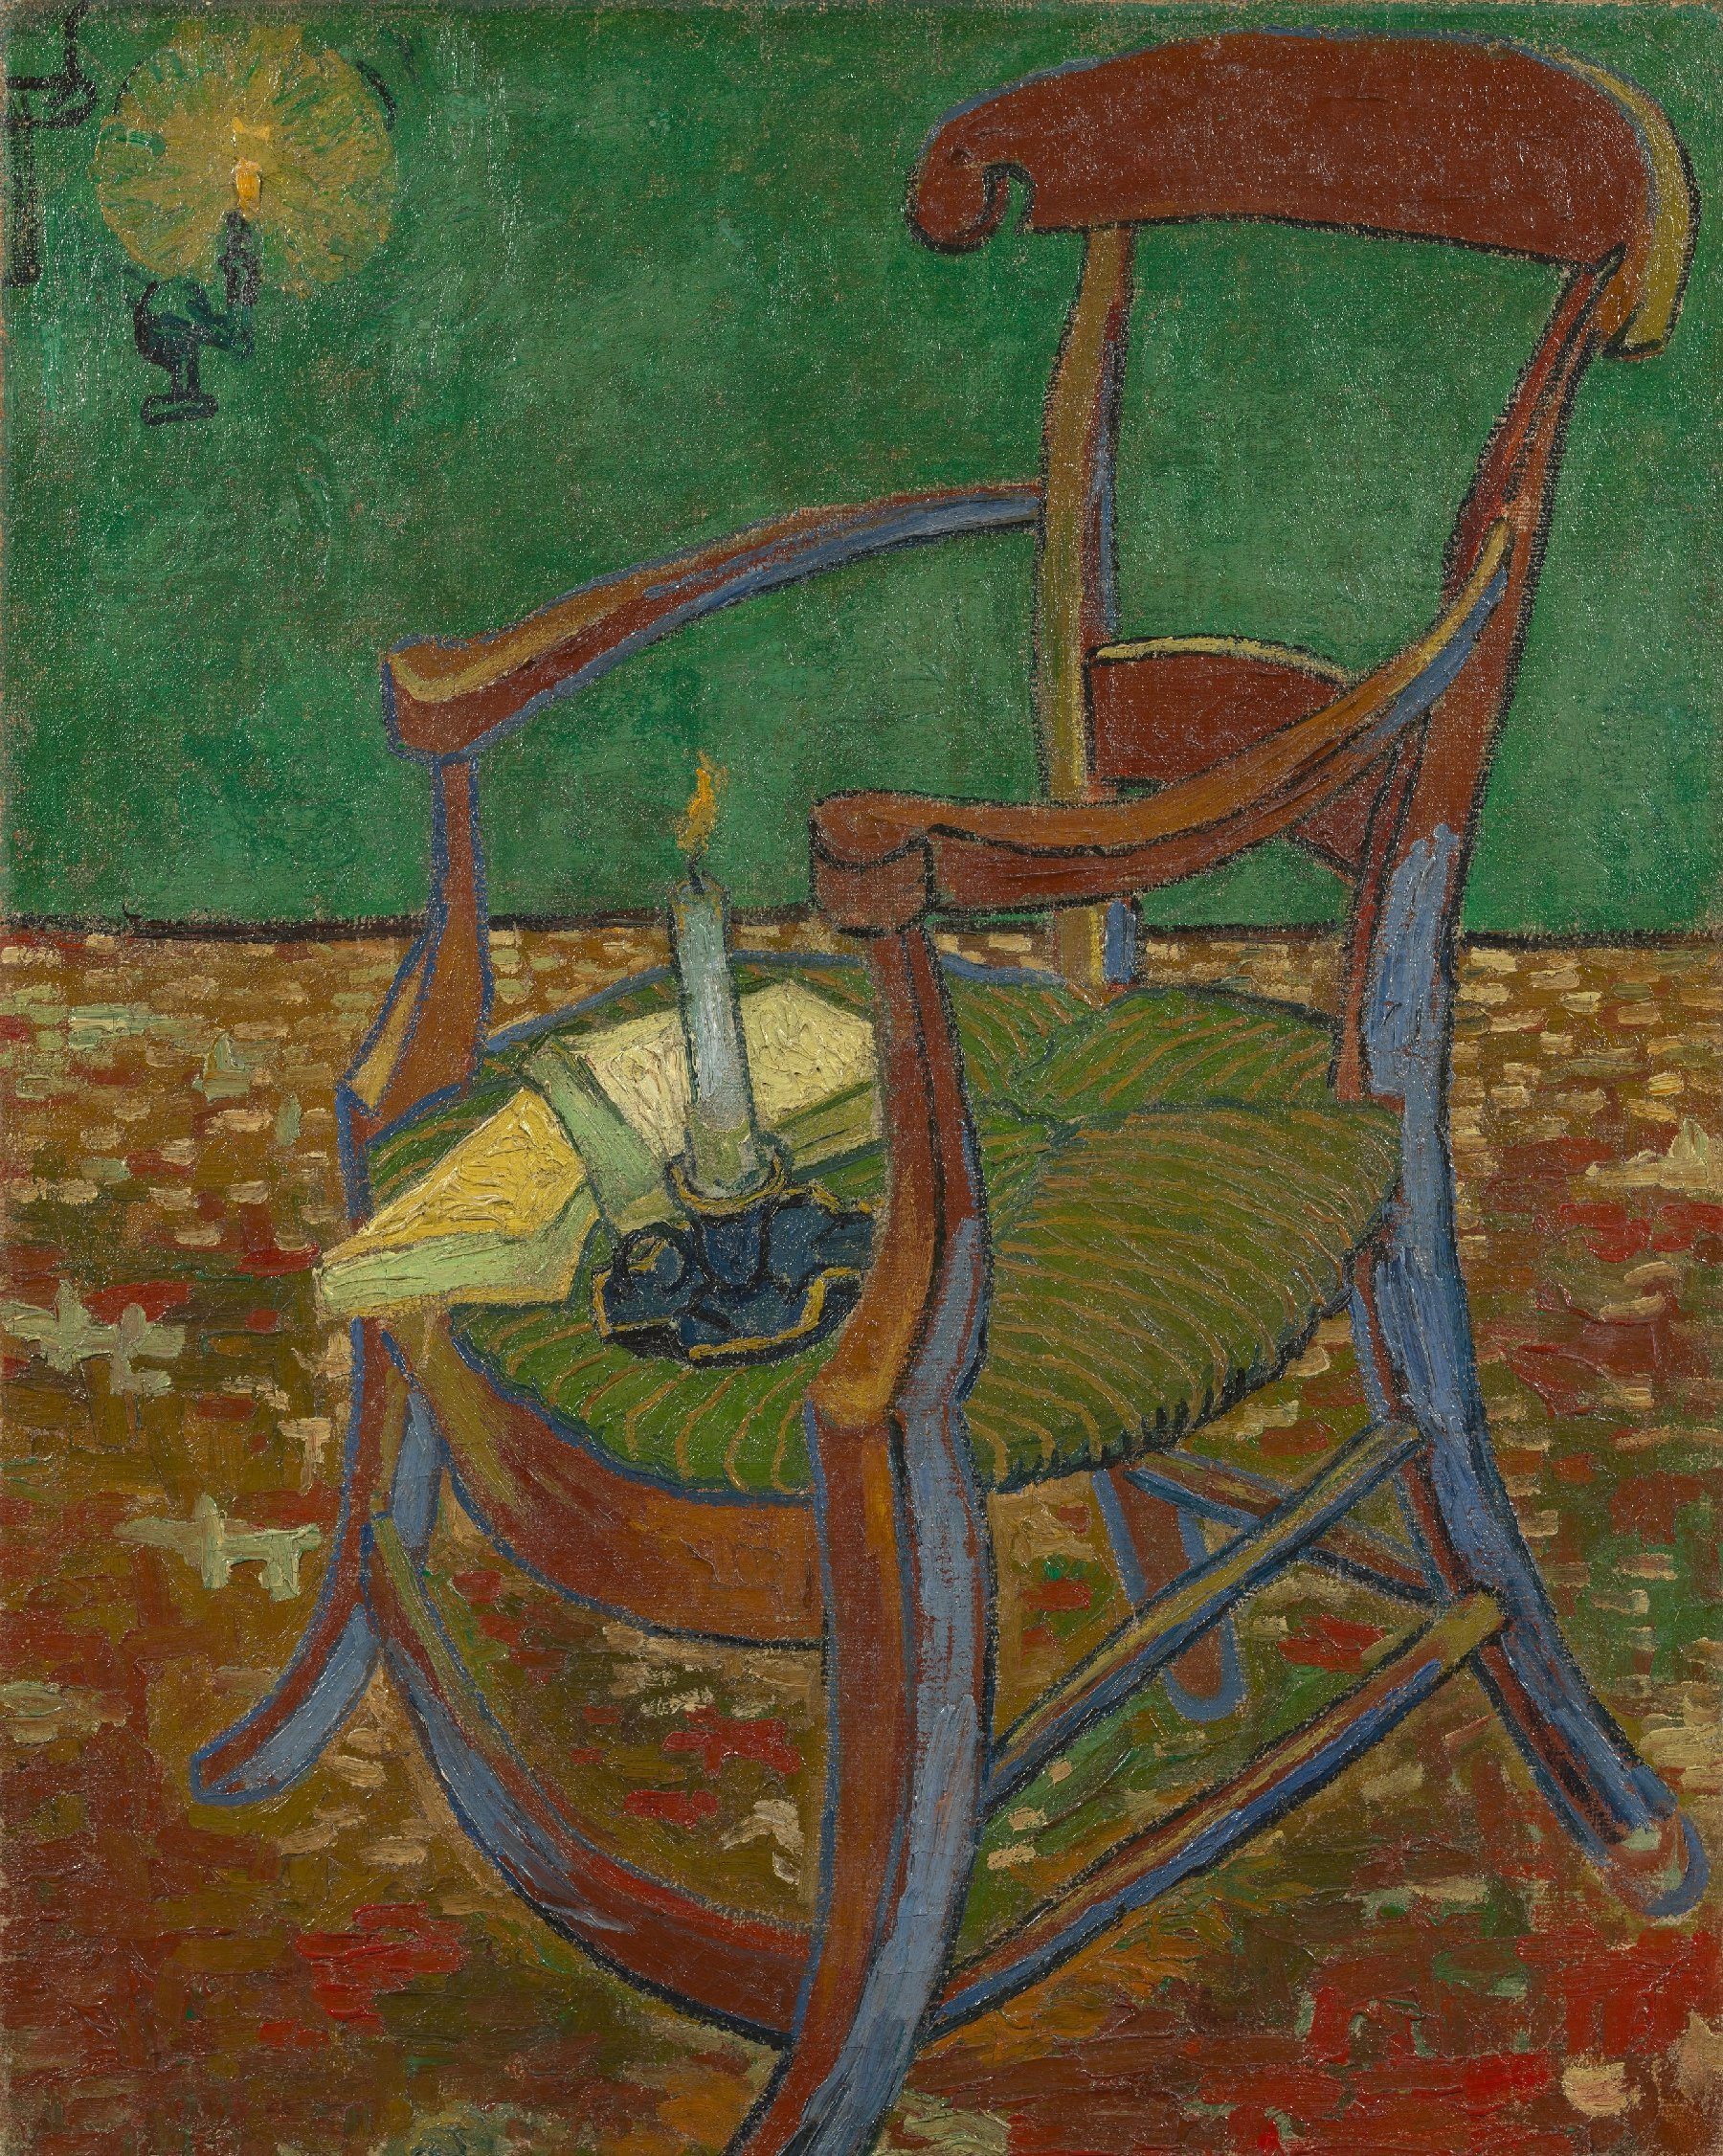 De stoel van Gauguin Vincent van Gogh (1853 - 1890), Arles, november 1888